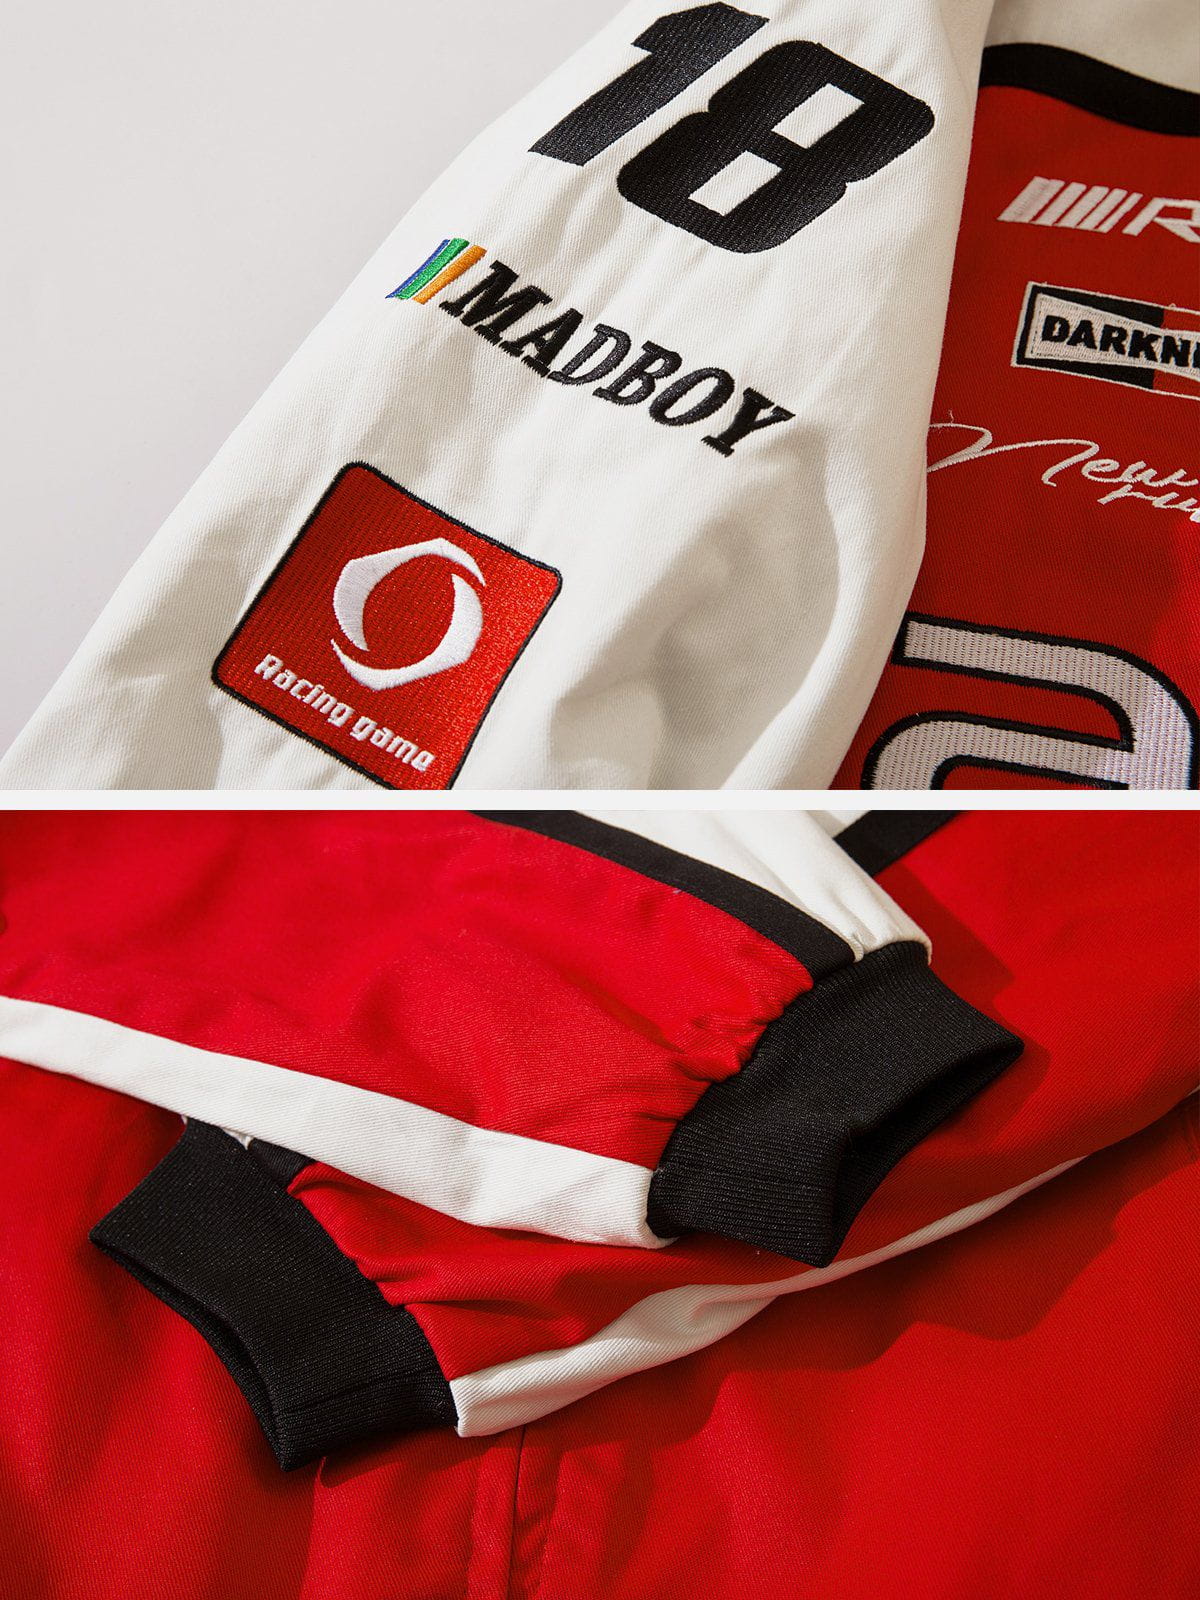 Majesda® - Patchwork Embroidery Racing Jacket outfit ideas, streetwear fashion - majesda.com